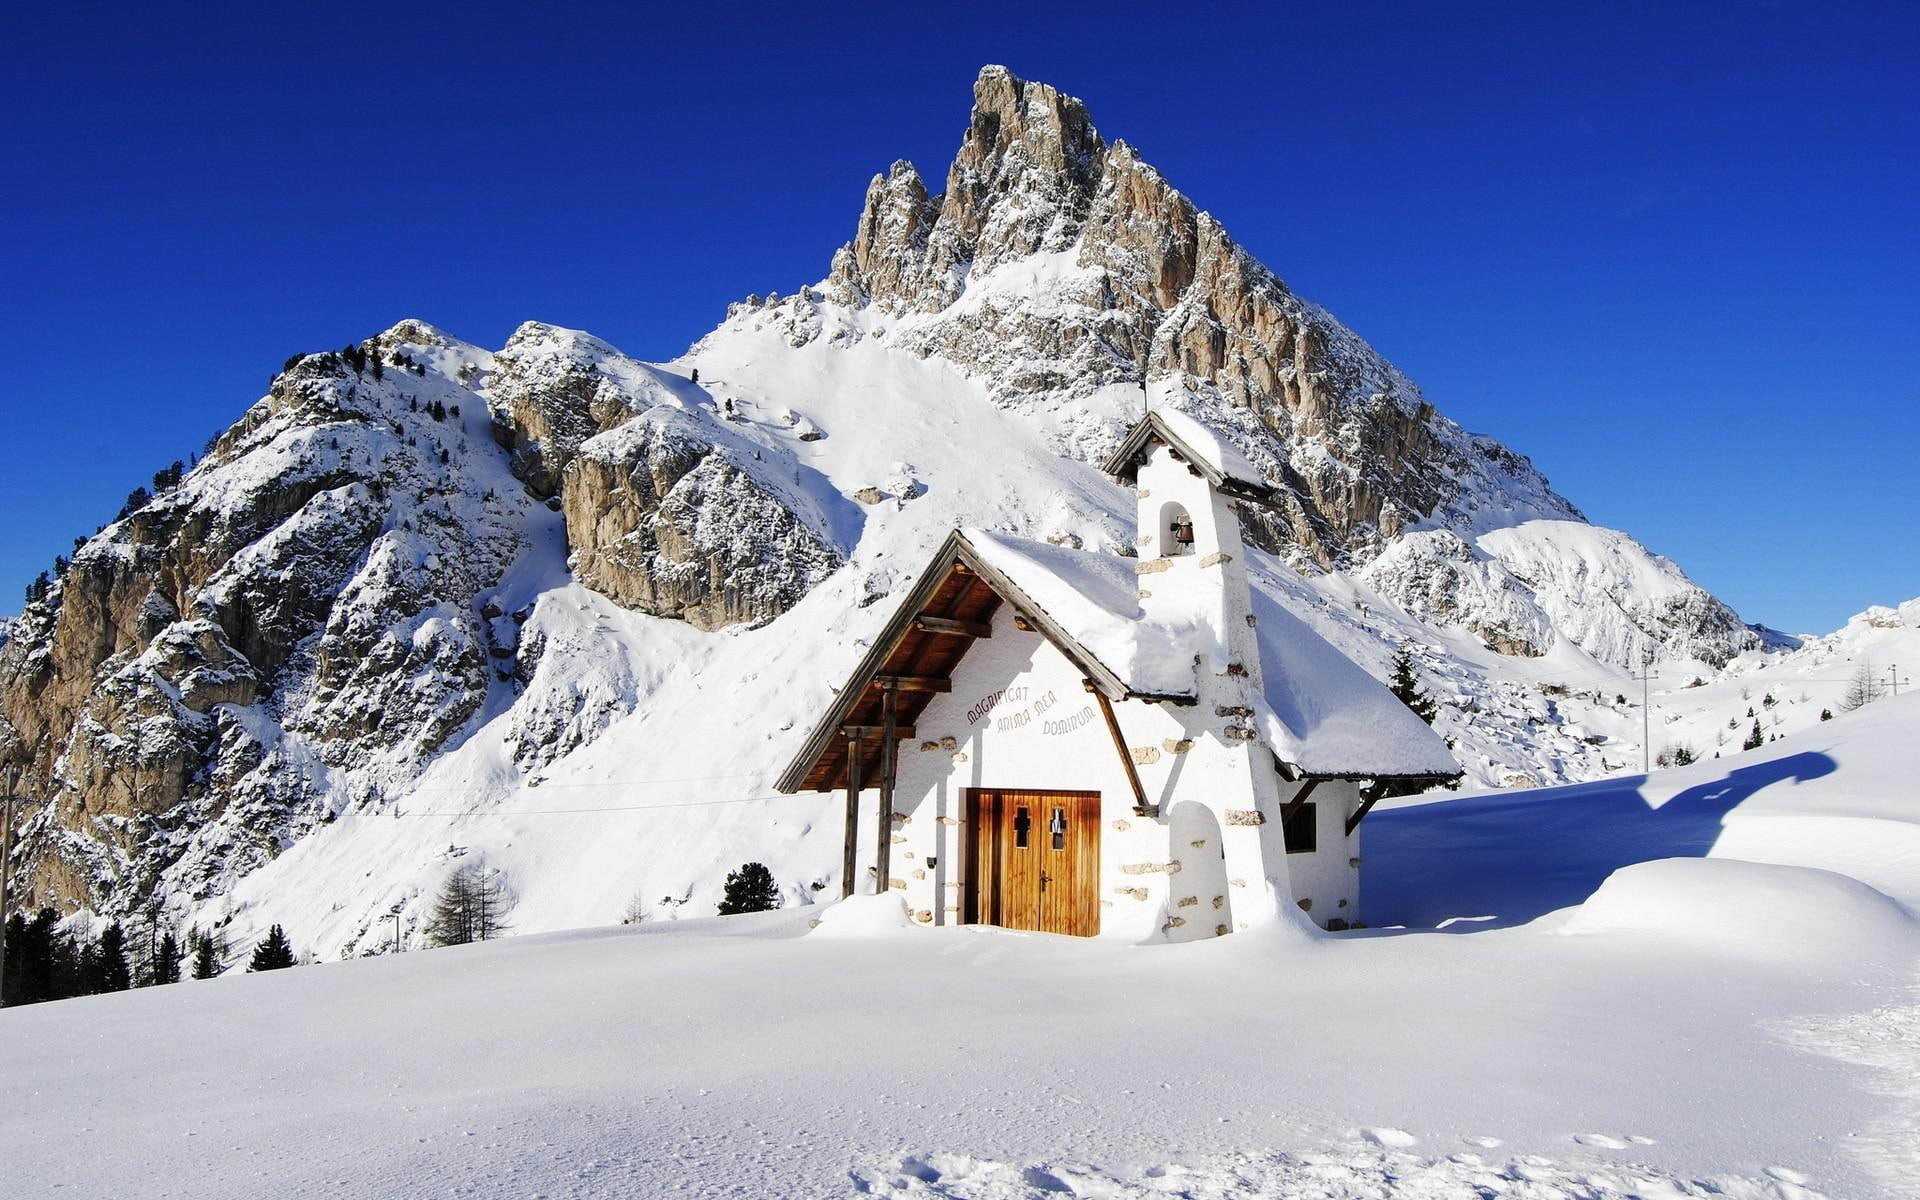 Falzarego Pass, Italy, concrete house on mountain covered in snow